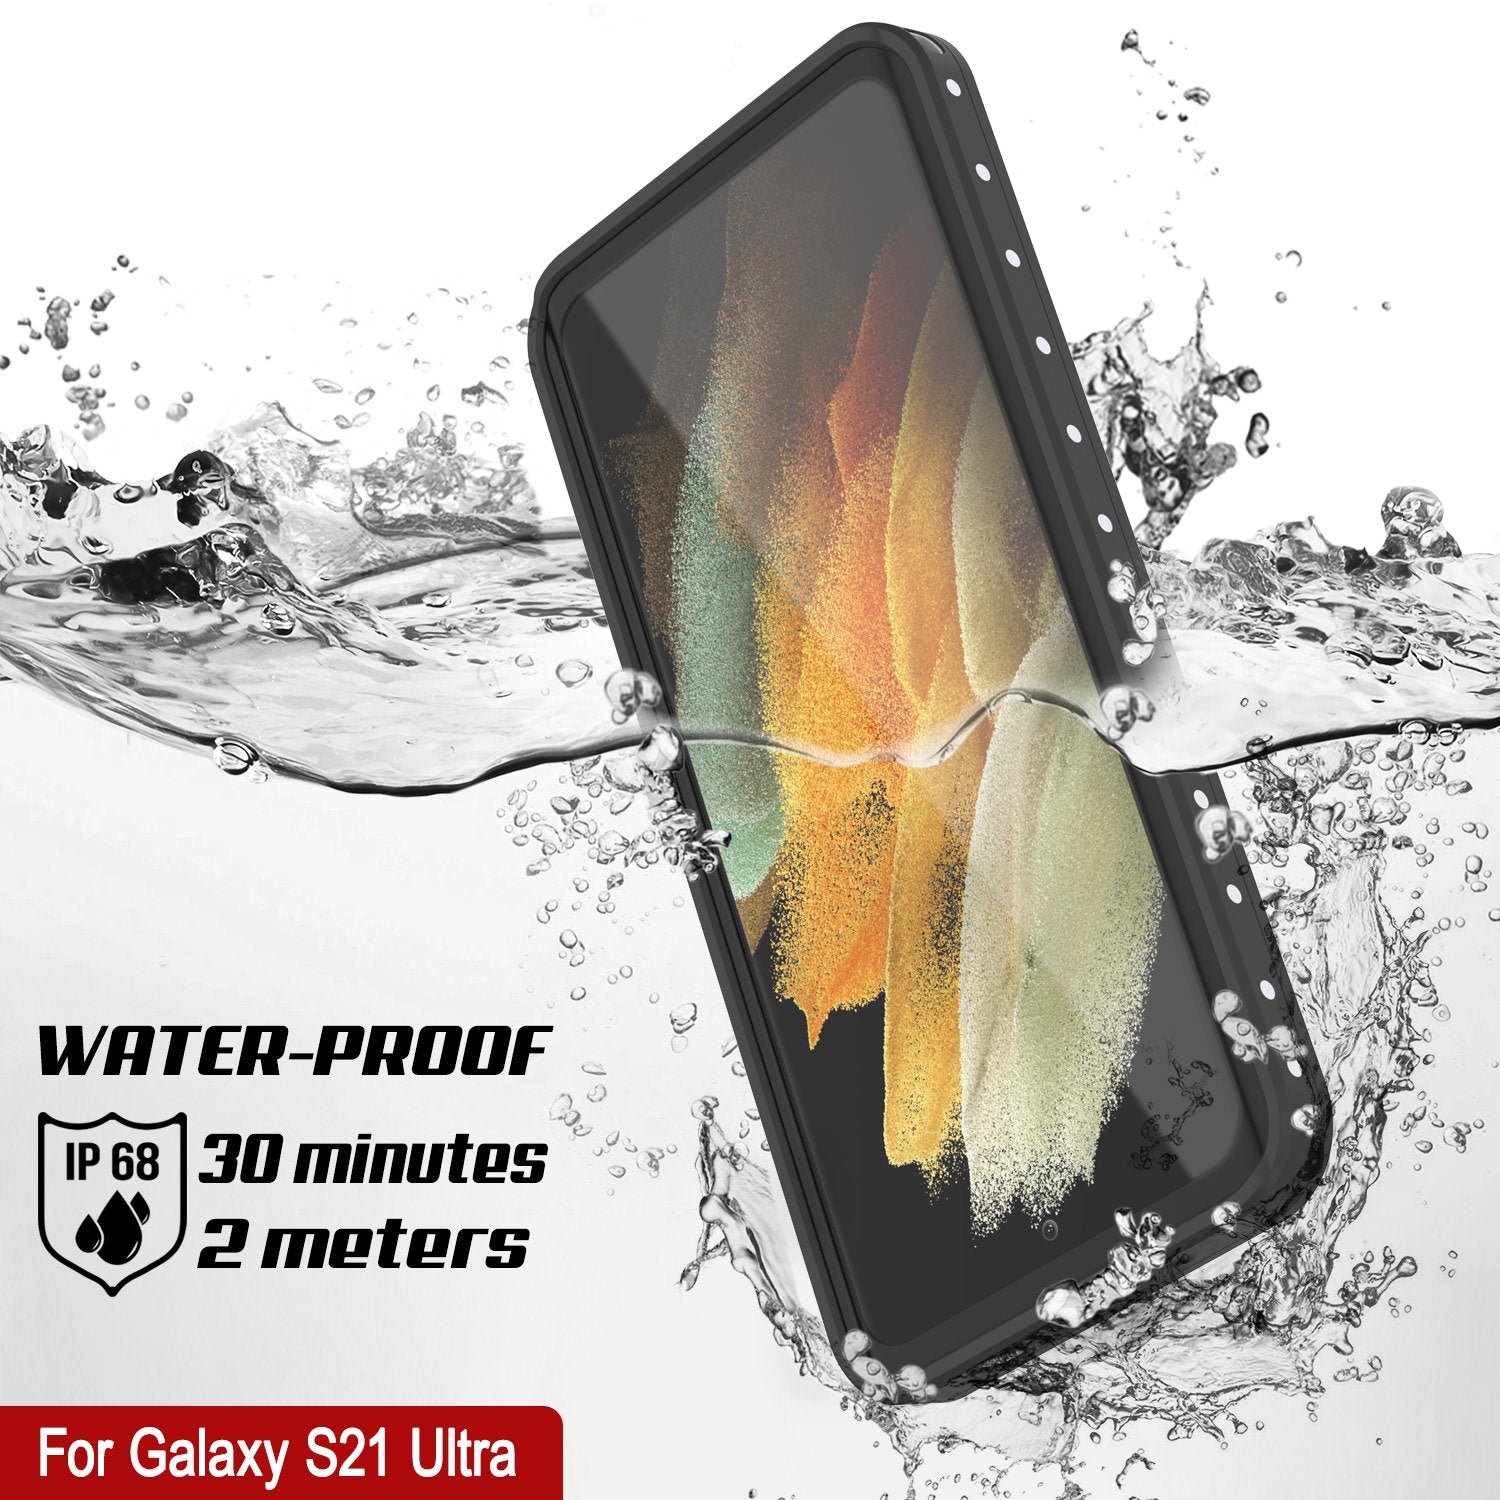 Galaxy S21 Ultra Waterproof Case, Punkcase StudStar White Thin 6.6ft Underwater IP68 Shock/Snow Proof